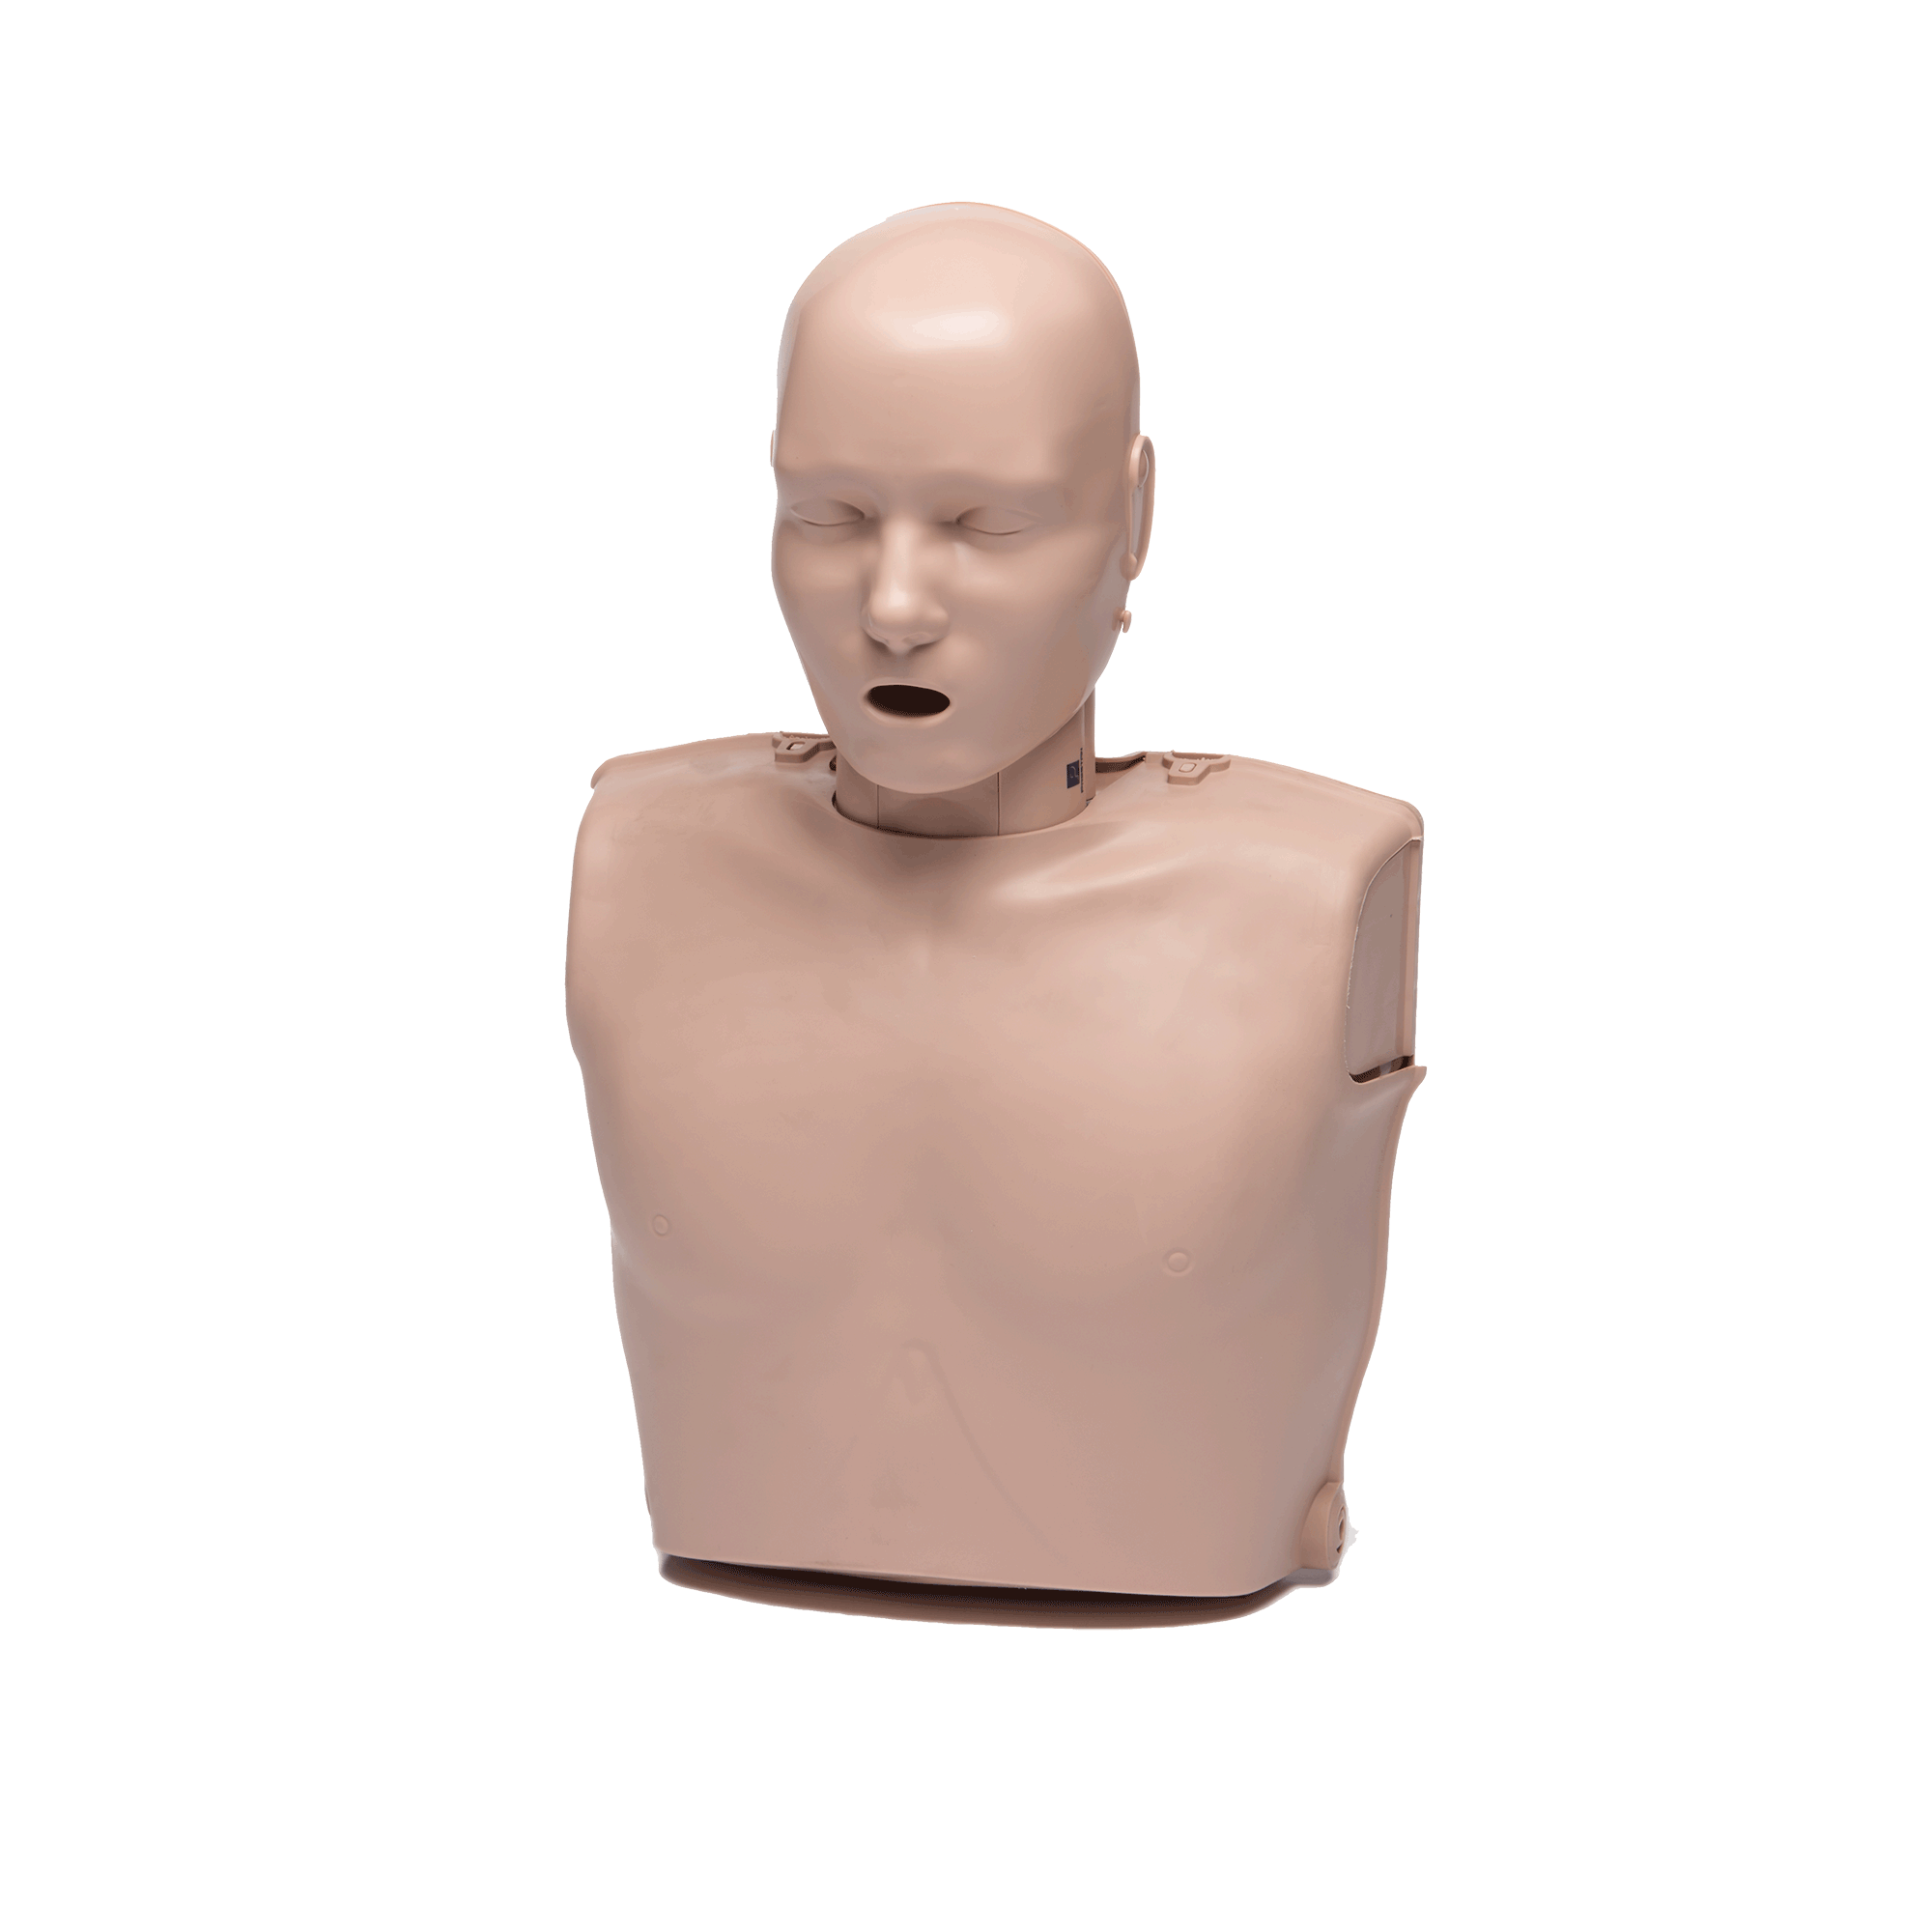 Prestan Adult Ultralite CPR Manikin - (4 Pack), Tan Skin, AED Trainer Pad Compatible